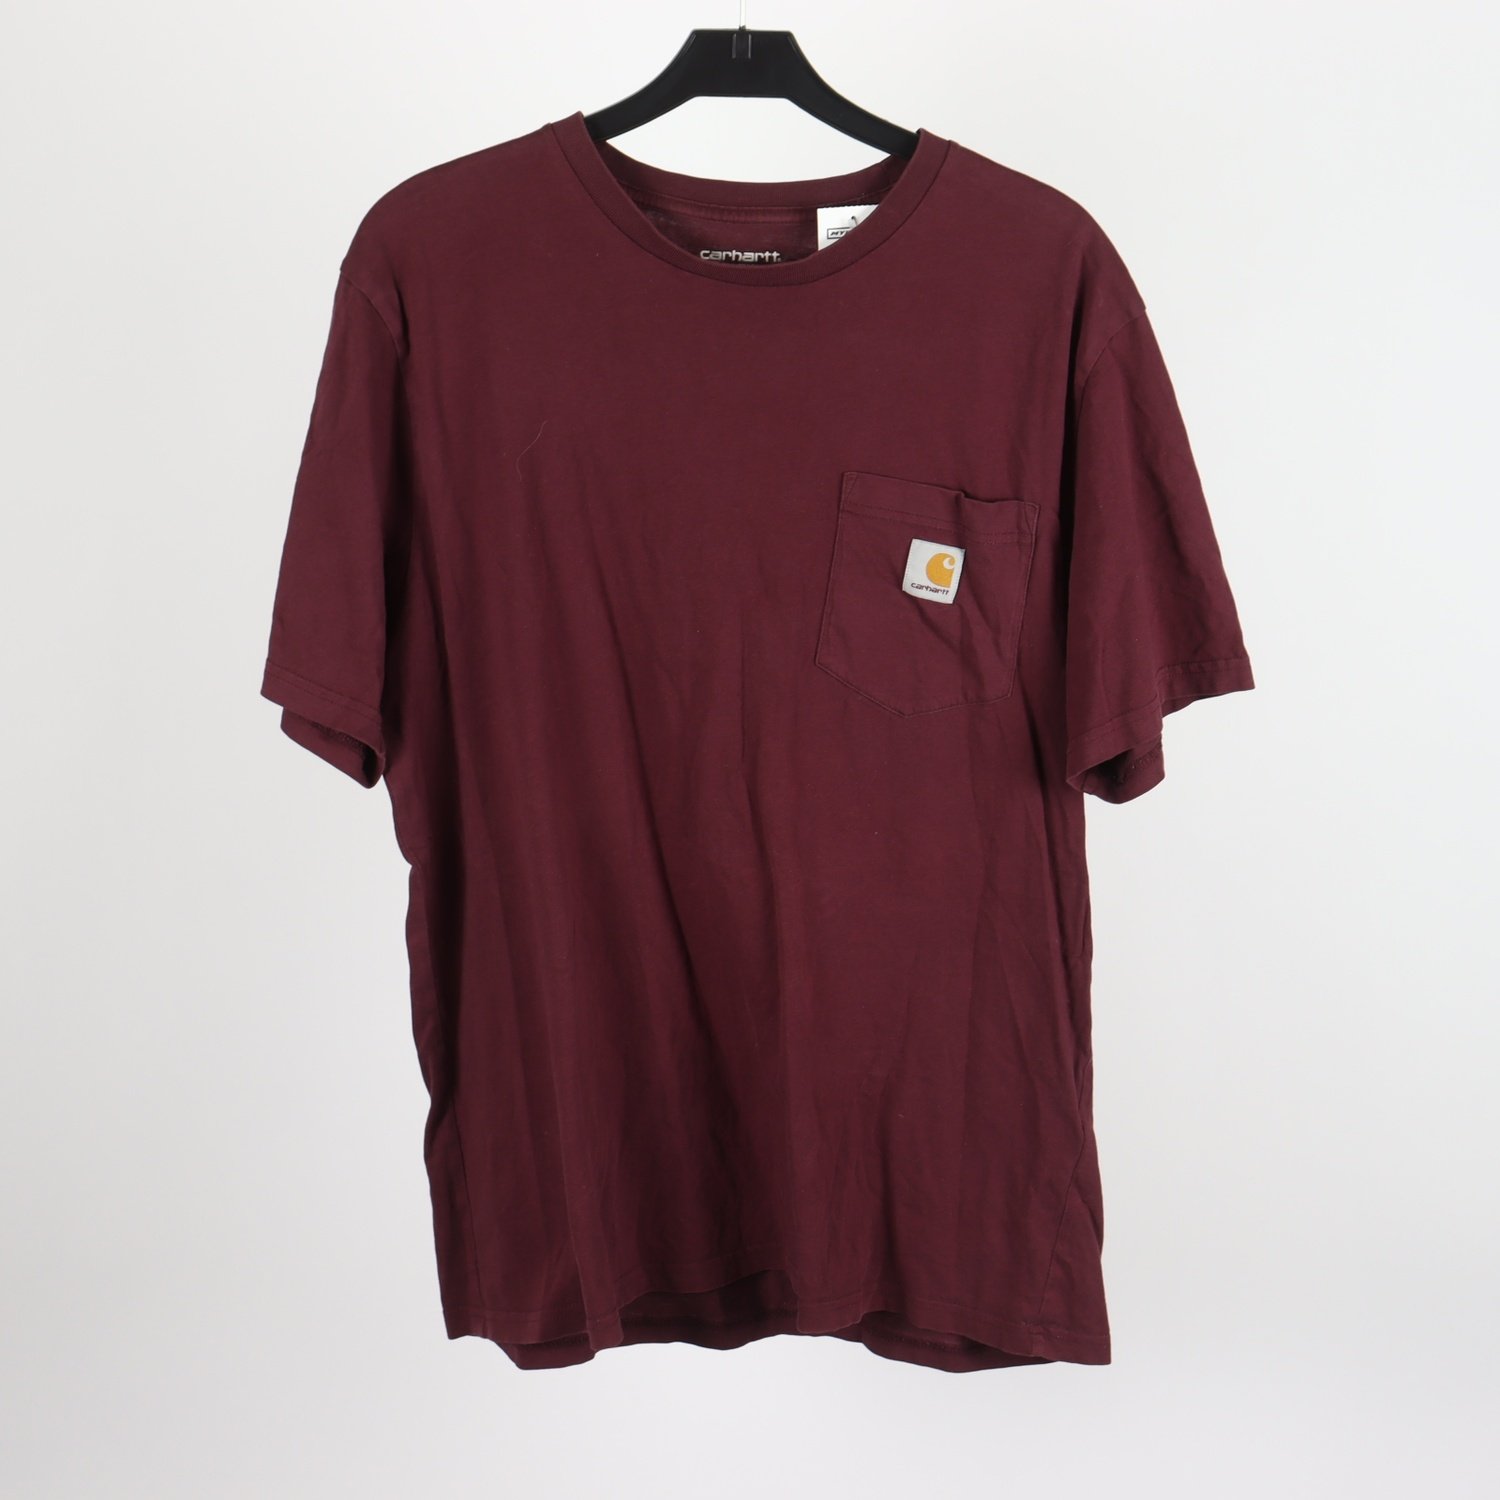 T-shirt, Carhartt, vinröd, stl. L